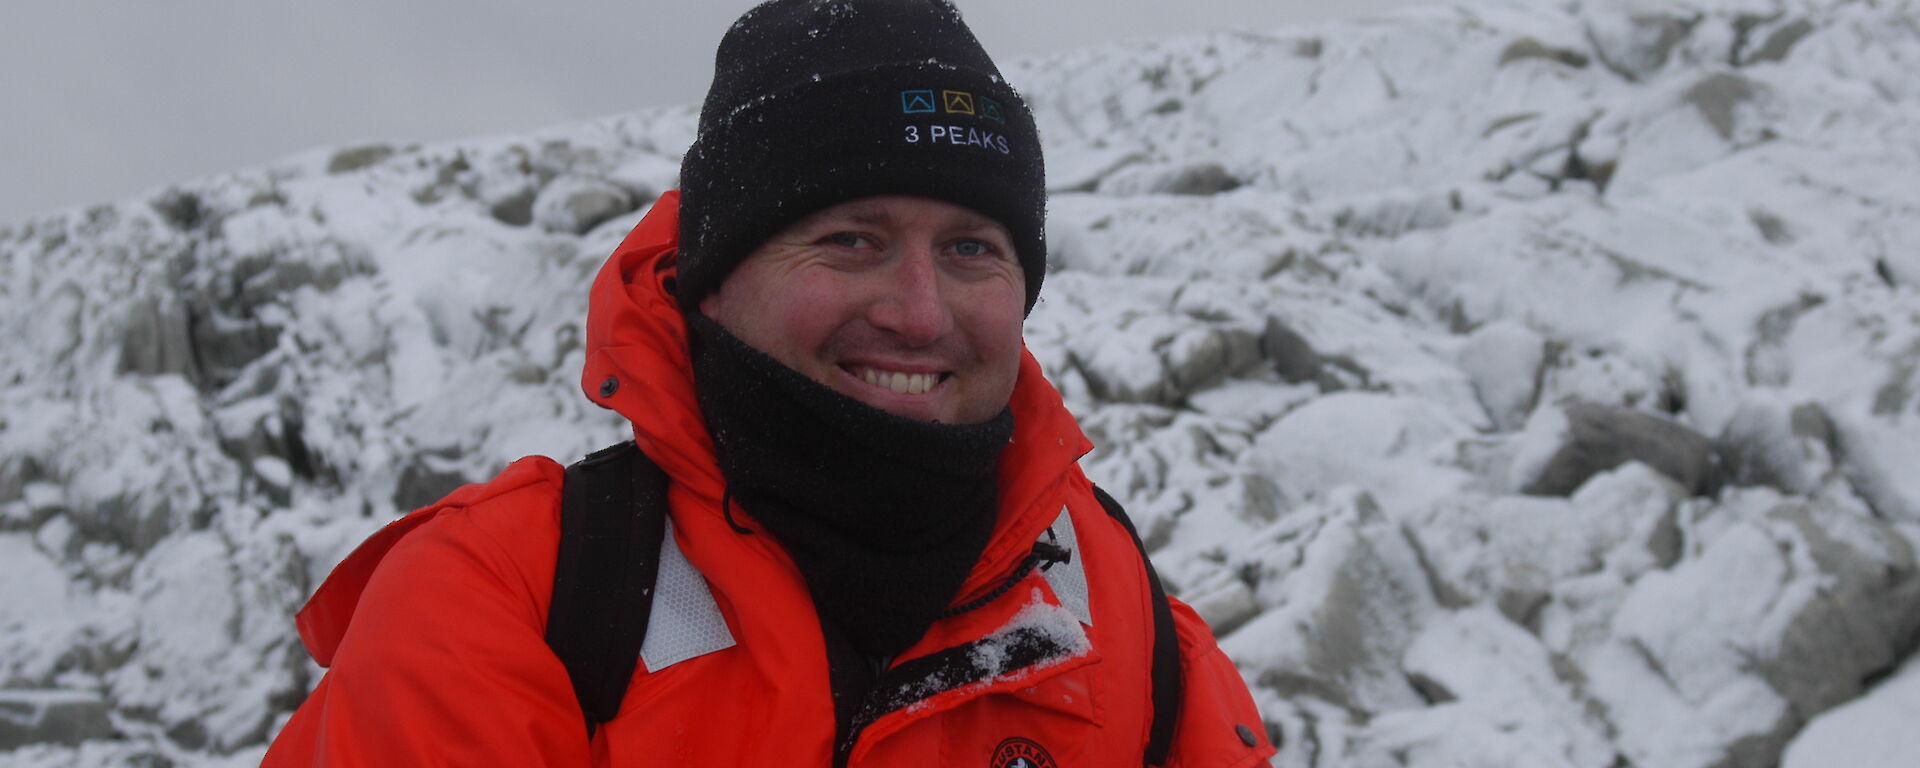 Kym Newbery in Antarctica.